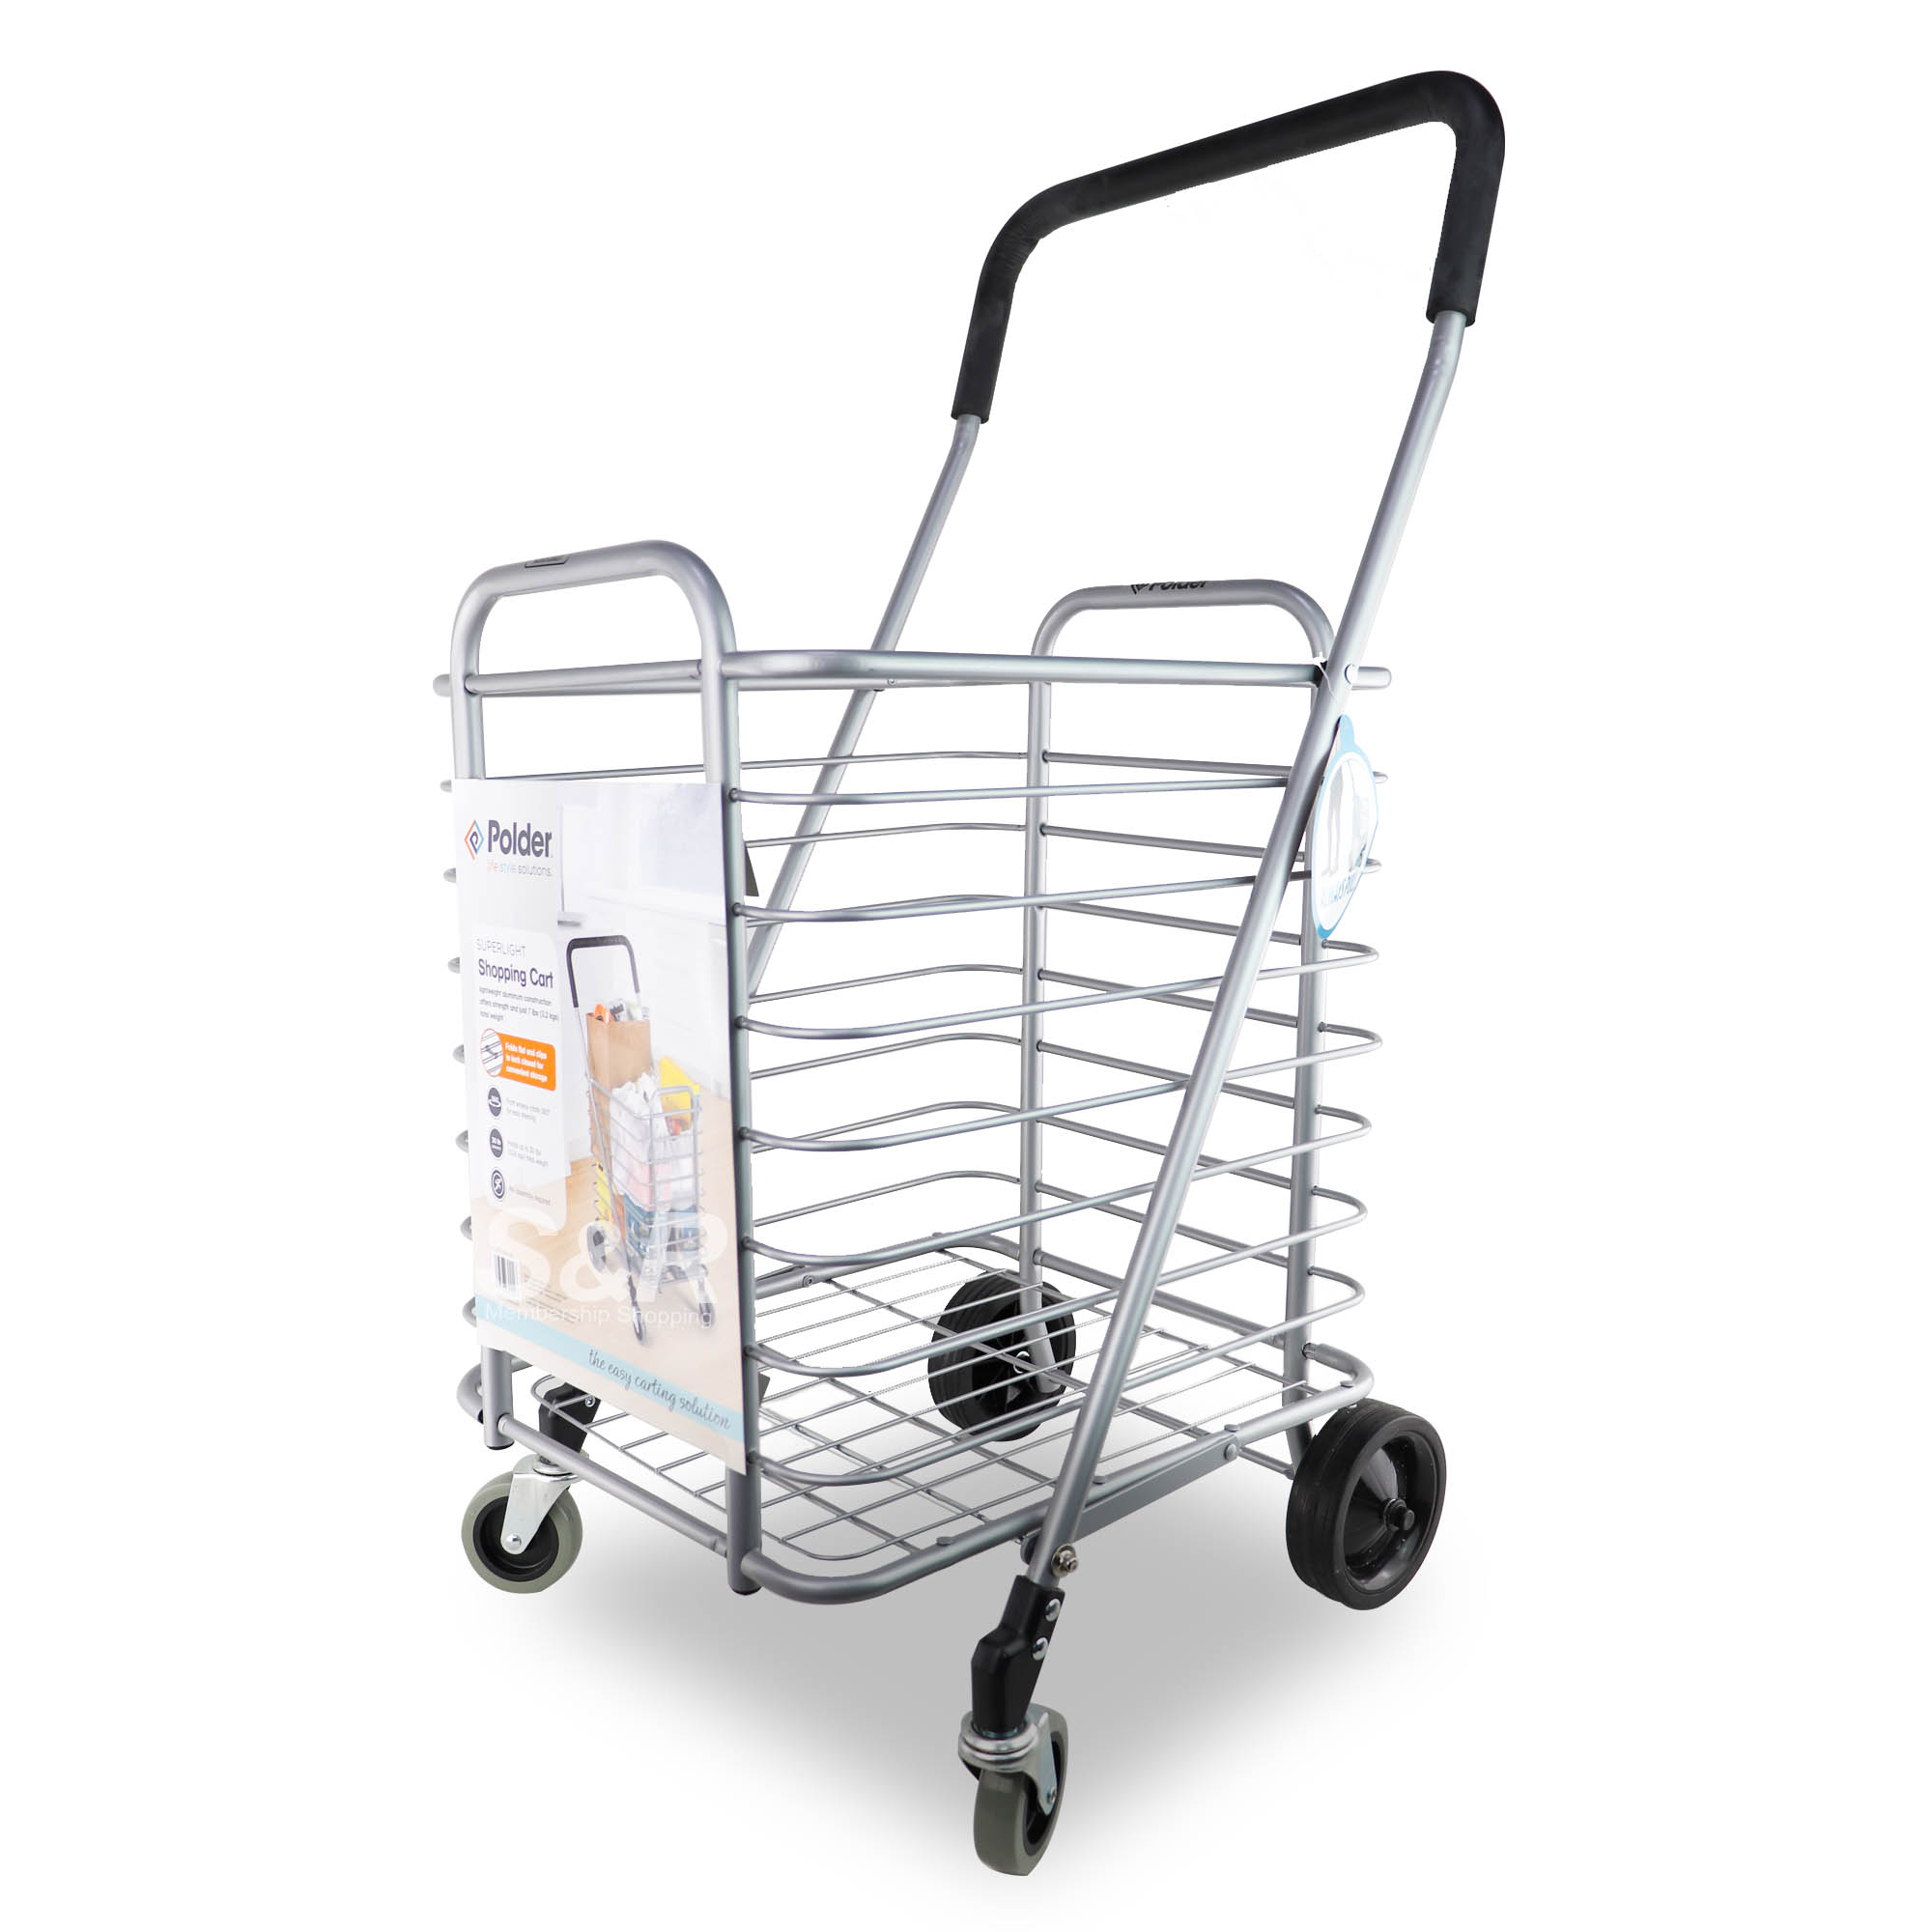 Polder Superlight Shopping Cart 1pc